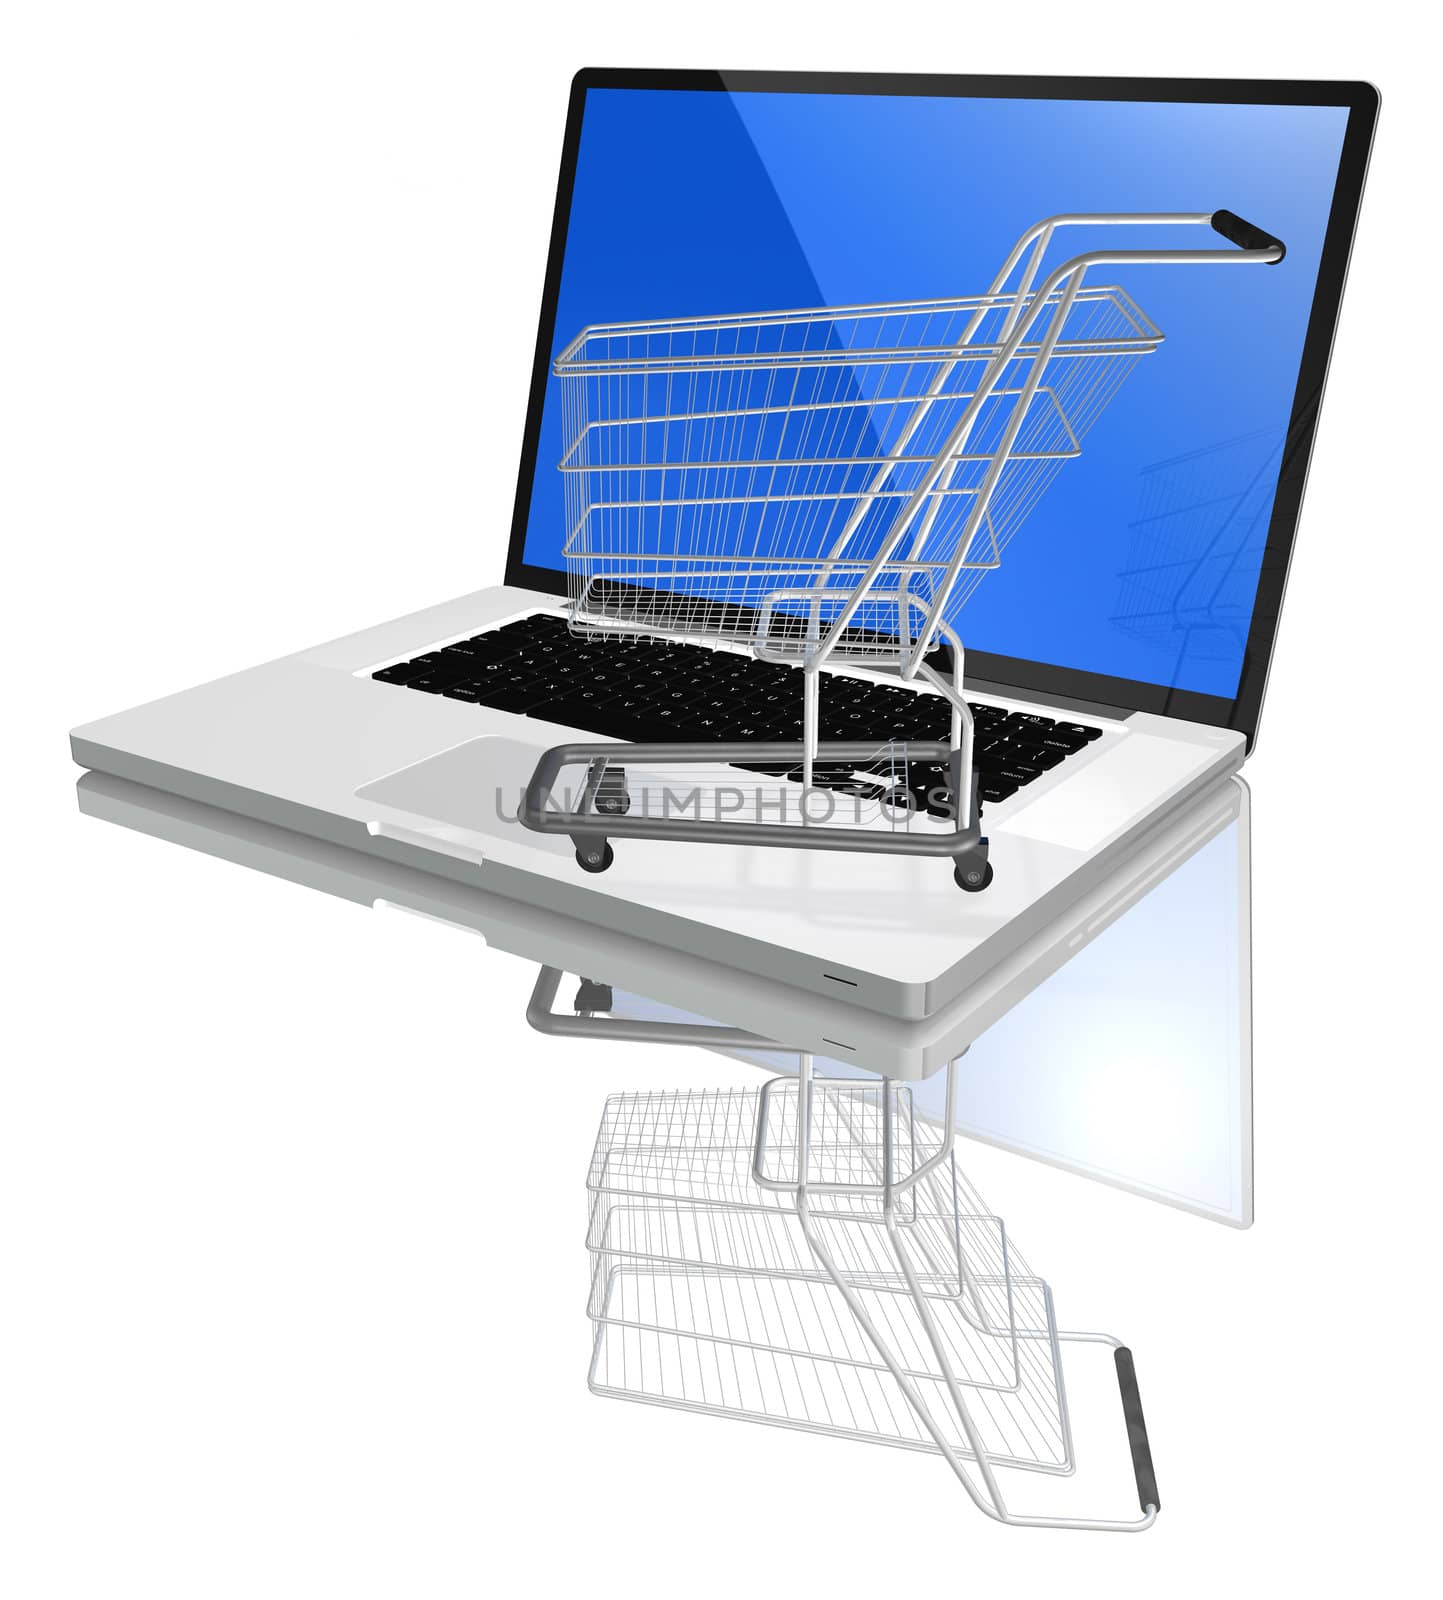 Concept E-commerce by manaemedia